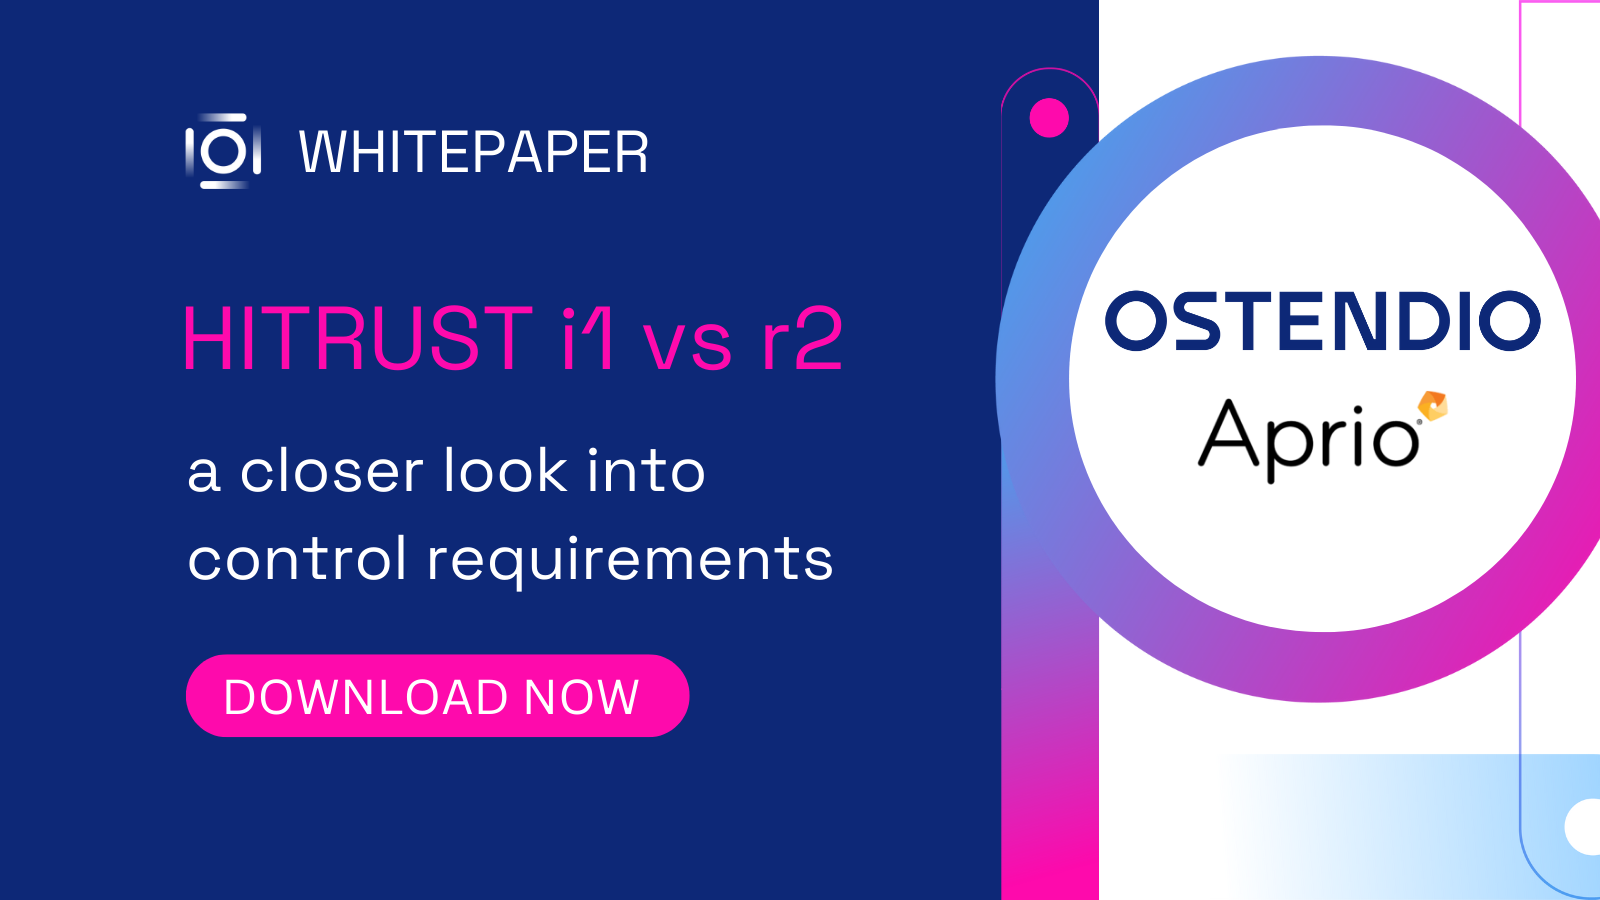 Download free Ostendio and Aprio Whitepaper - HITRUST i1 vs r2